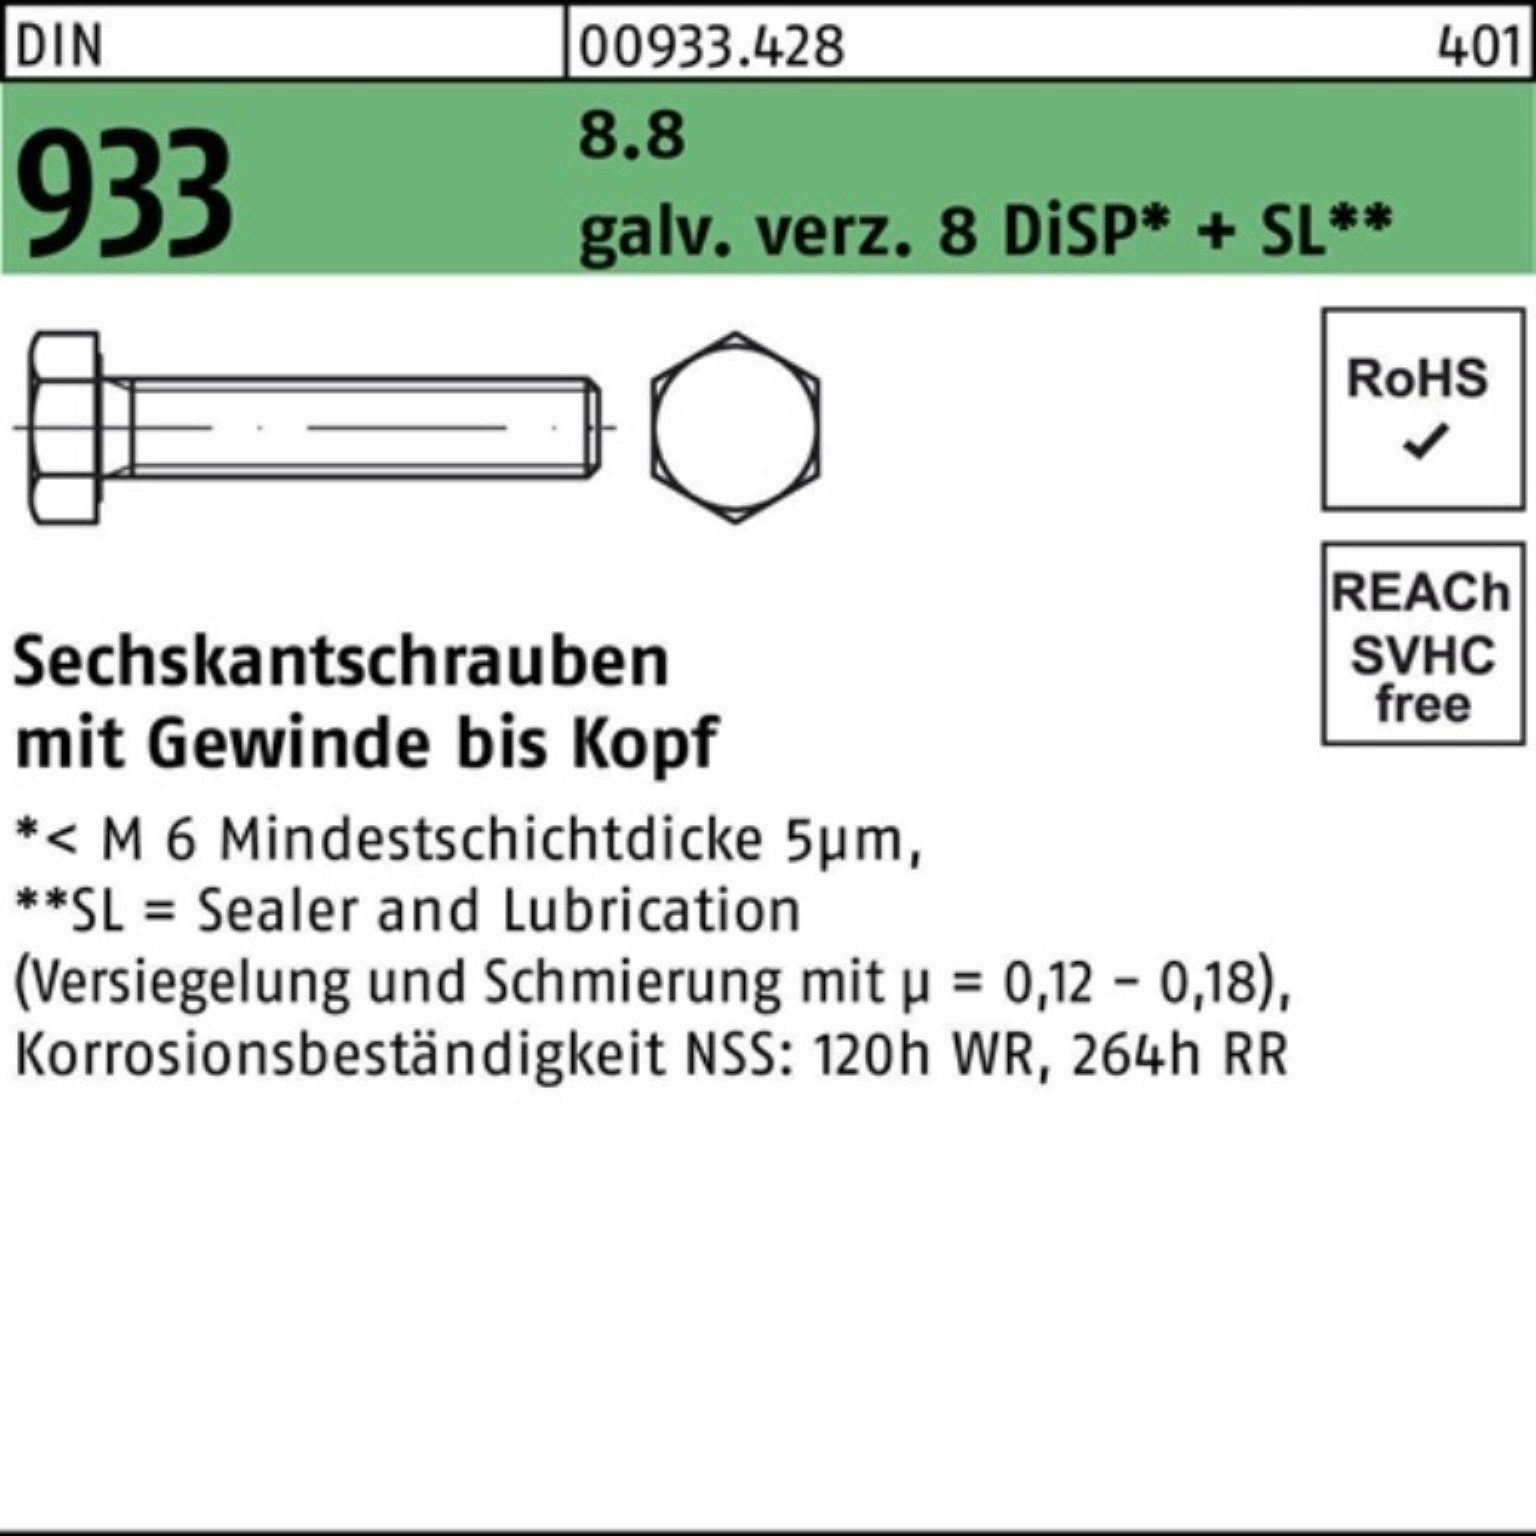 100er VG Sechskantschraube Zn DIN Pack M16x Reyher + 8.8 20 gal SL DiSP 933 Sechskantschraube 8